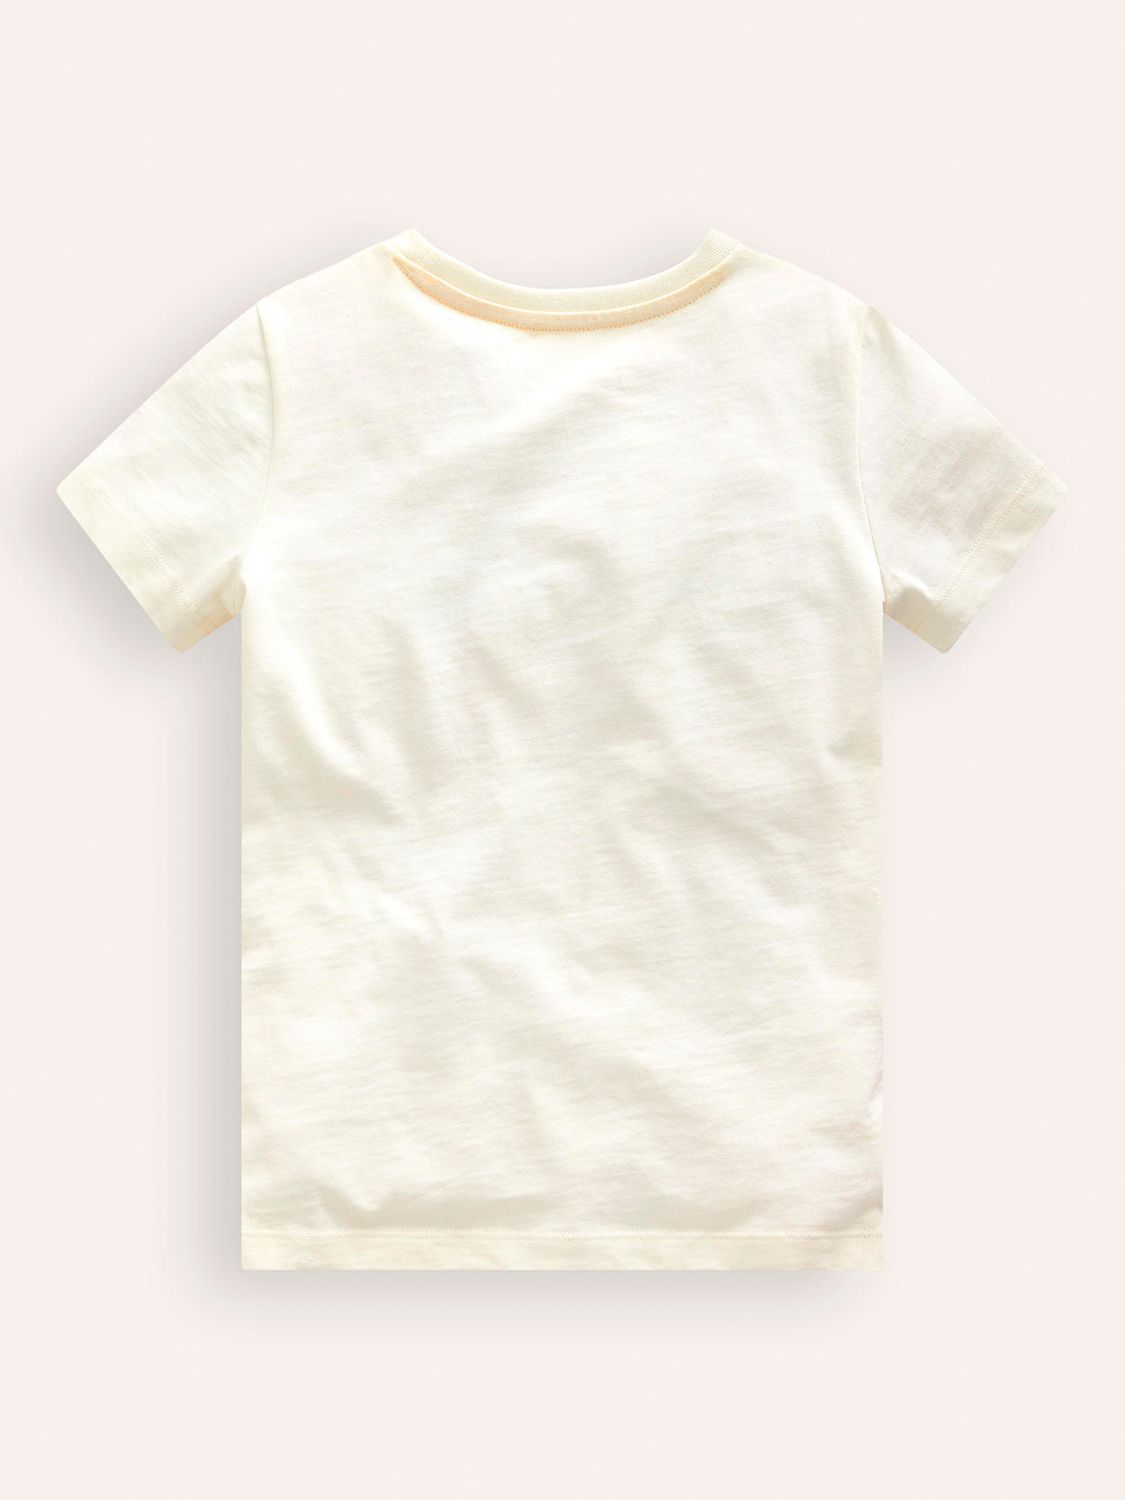 Mini Boden Kids' Woodlice Foil Print T-Shirt, Ivory, 12-18 months